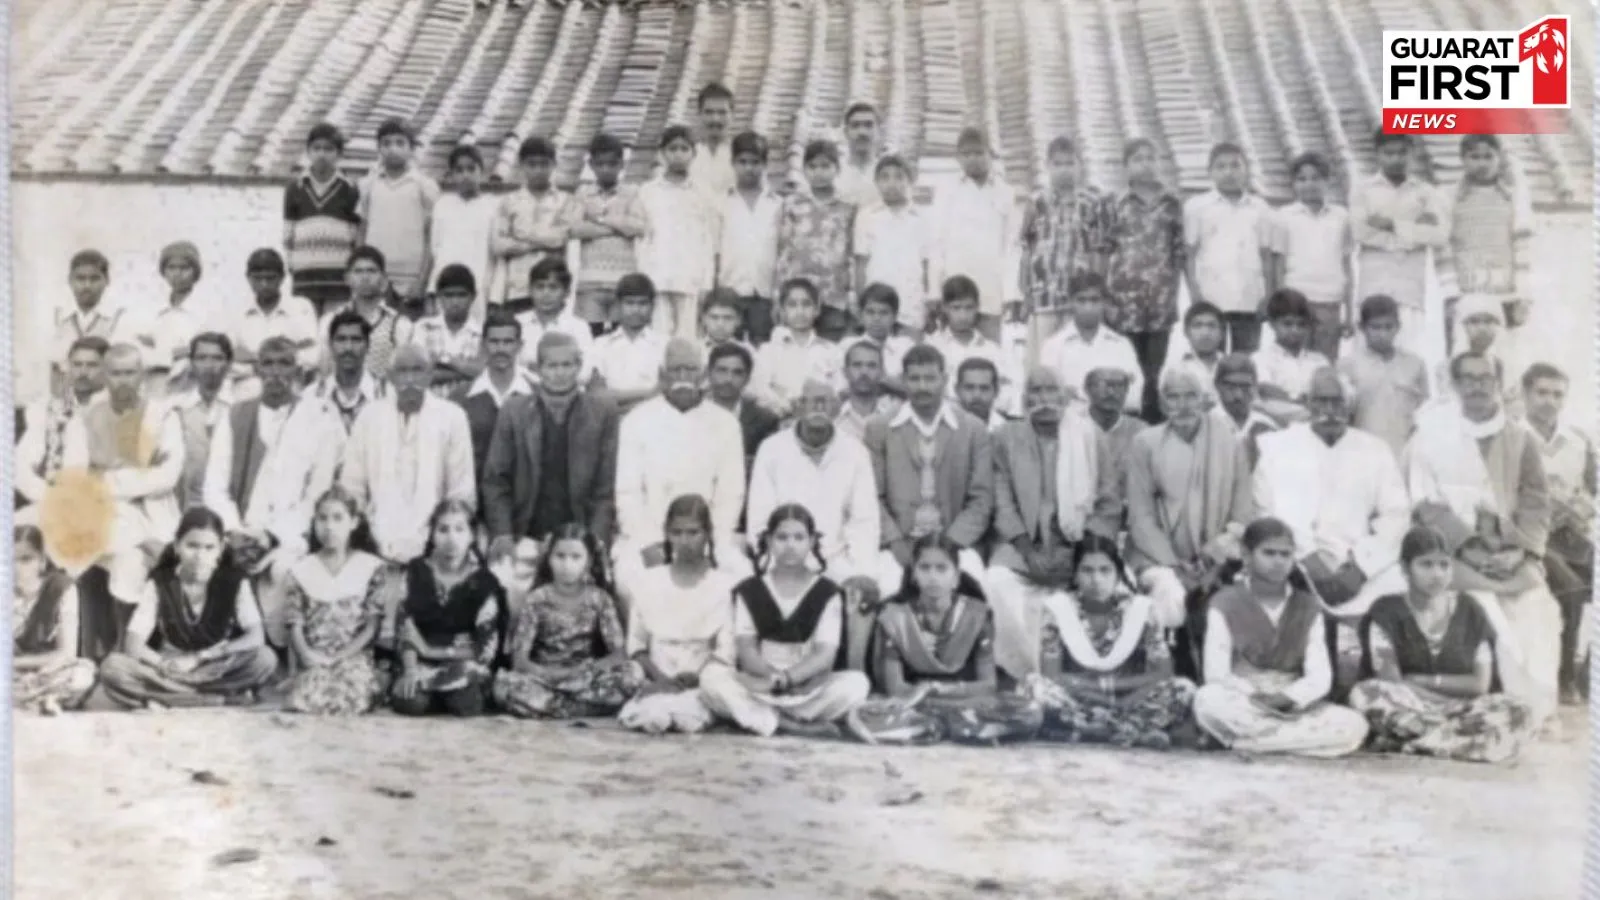 Rajput families